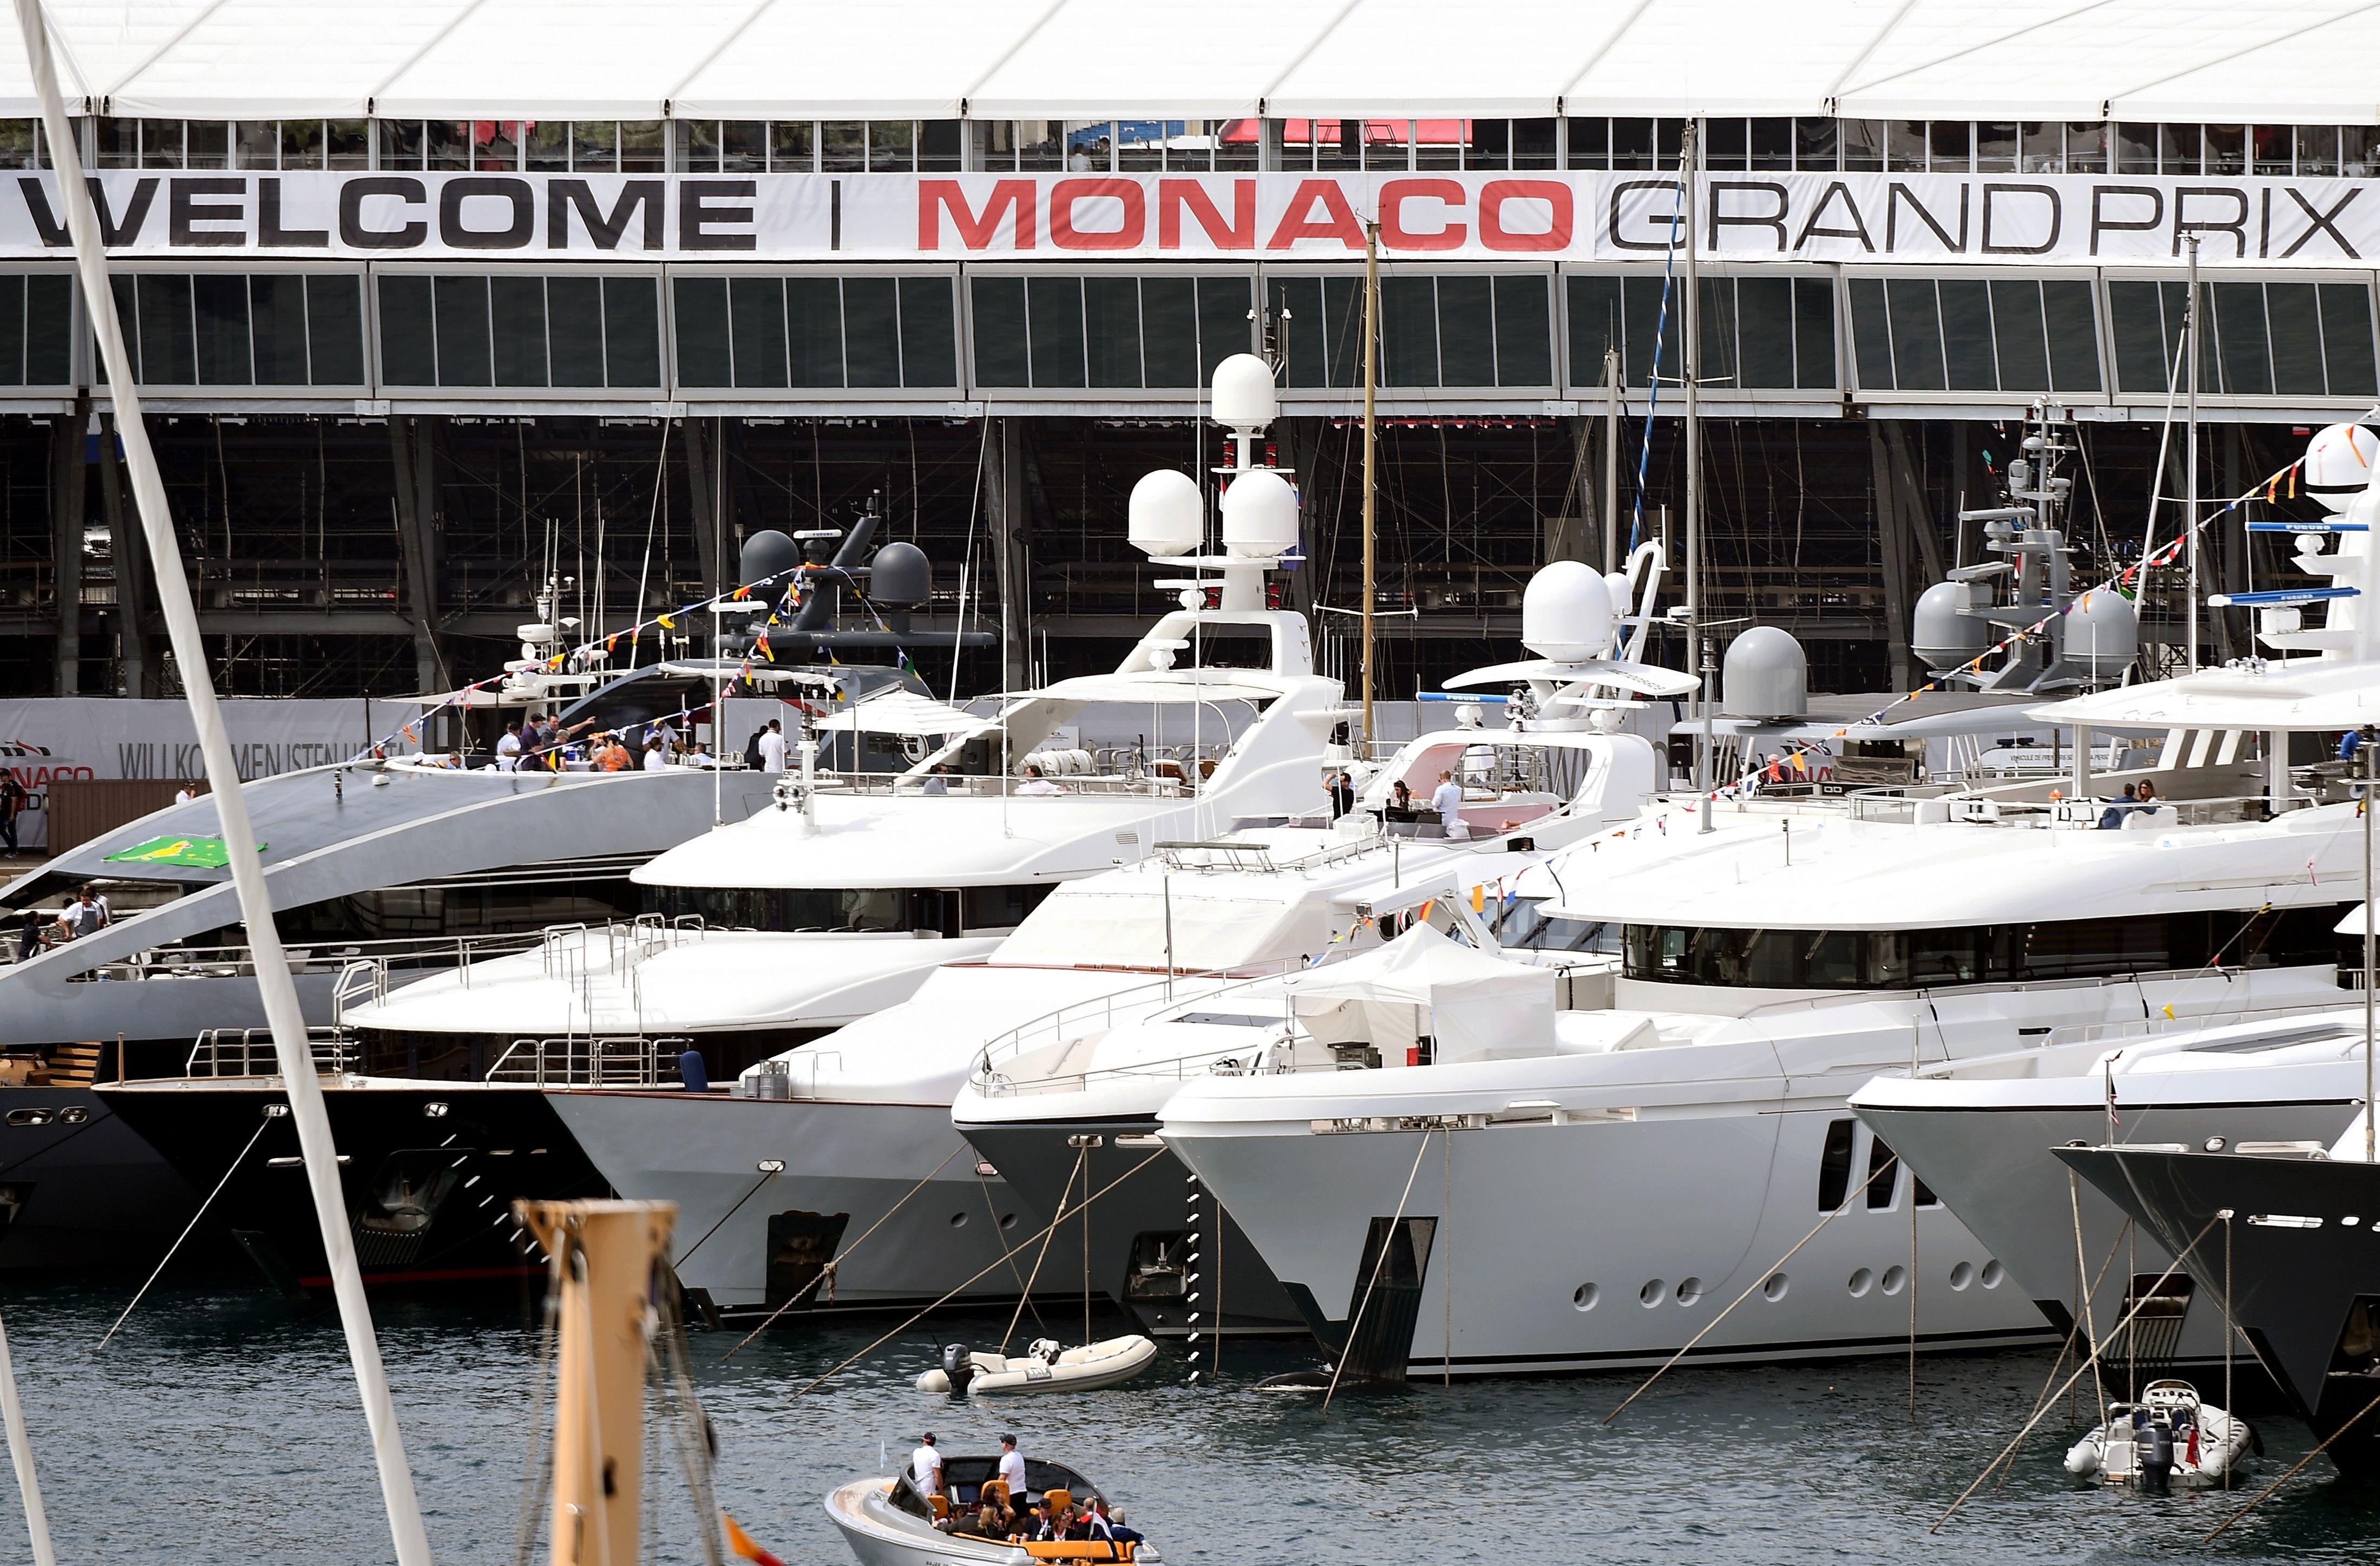 biggest yacht monaco grand prix